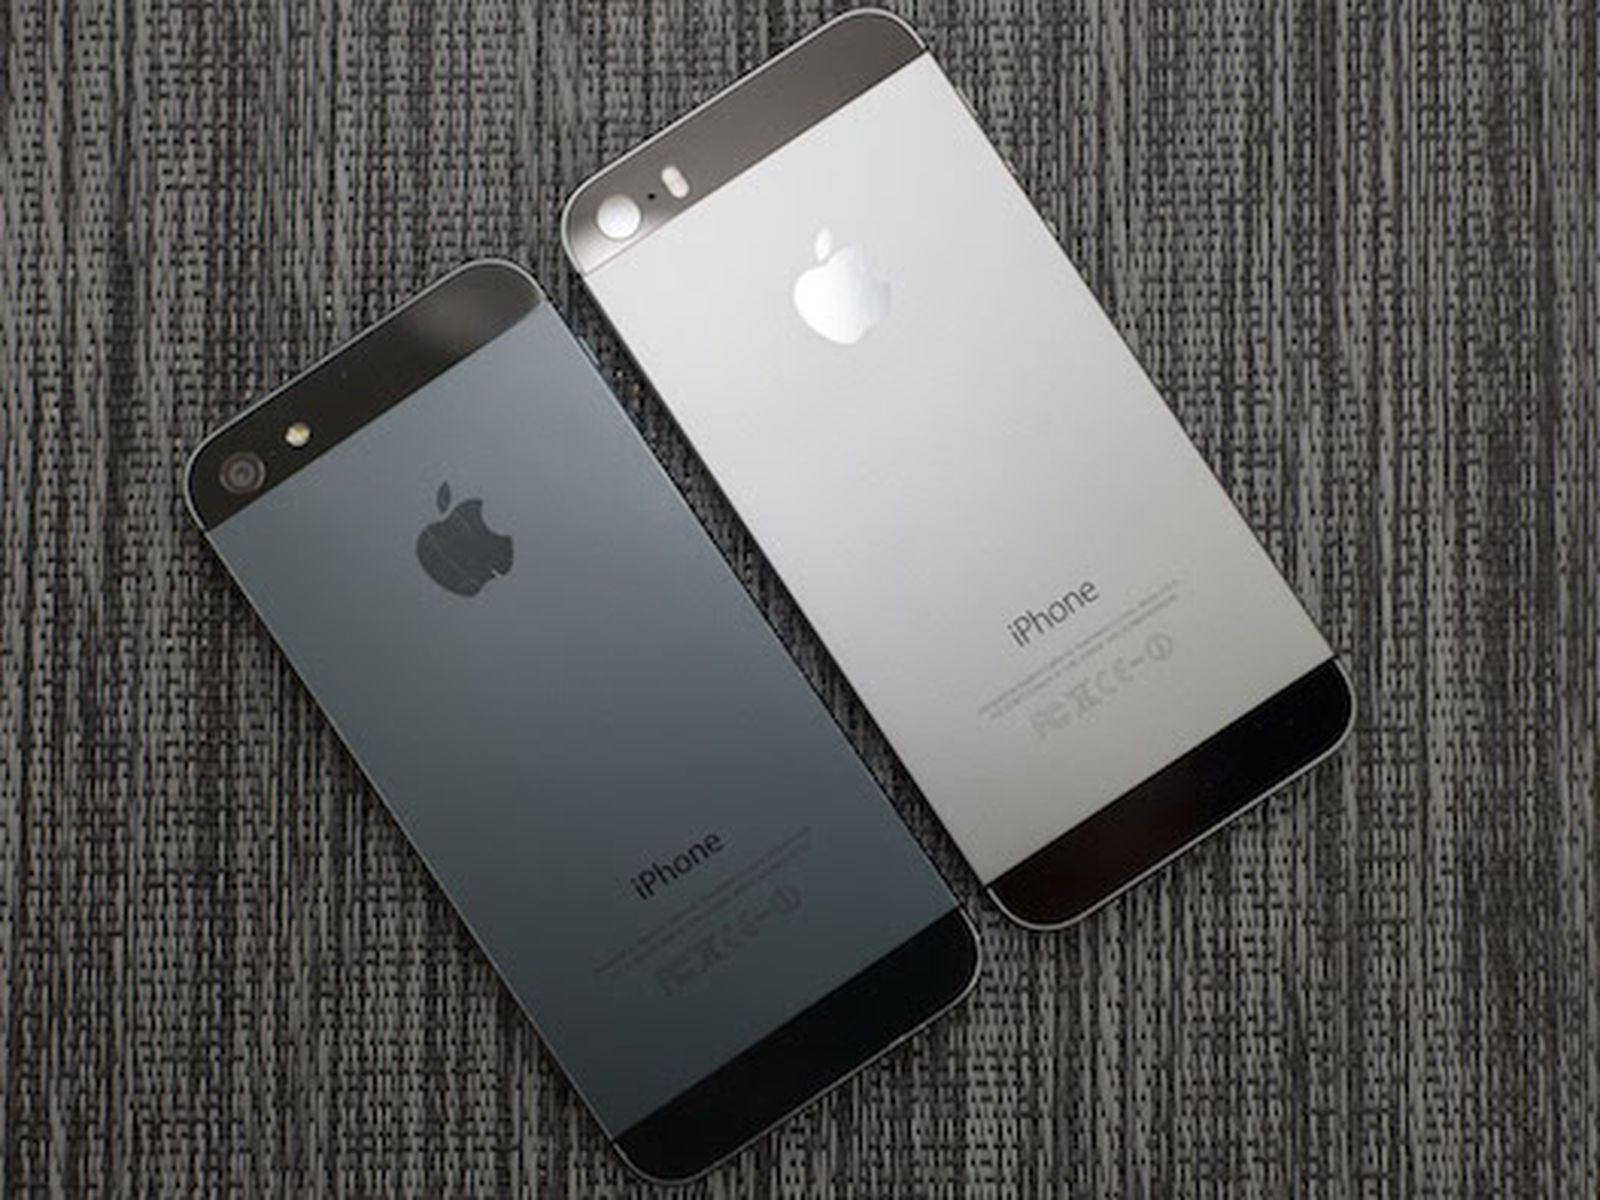 Rumored 'Deep Blue' iPhone 7 Said to Actually Be Very Dark Space Gray -  MacRumors